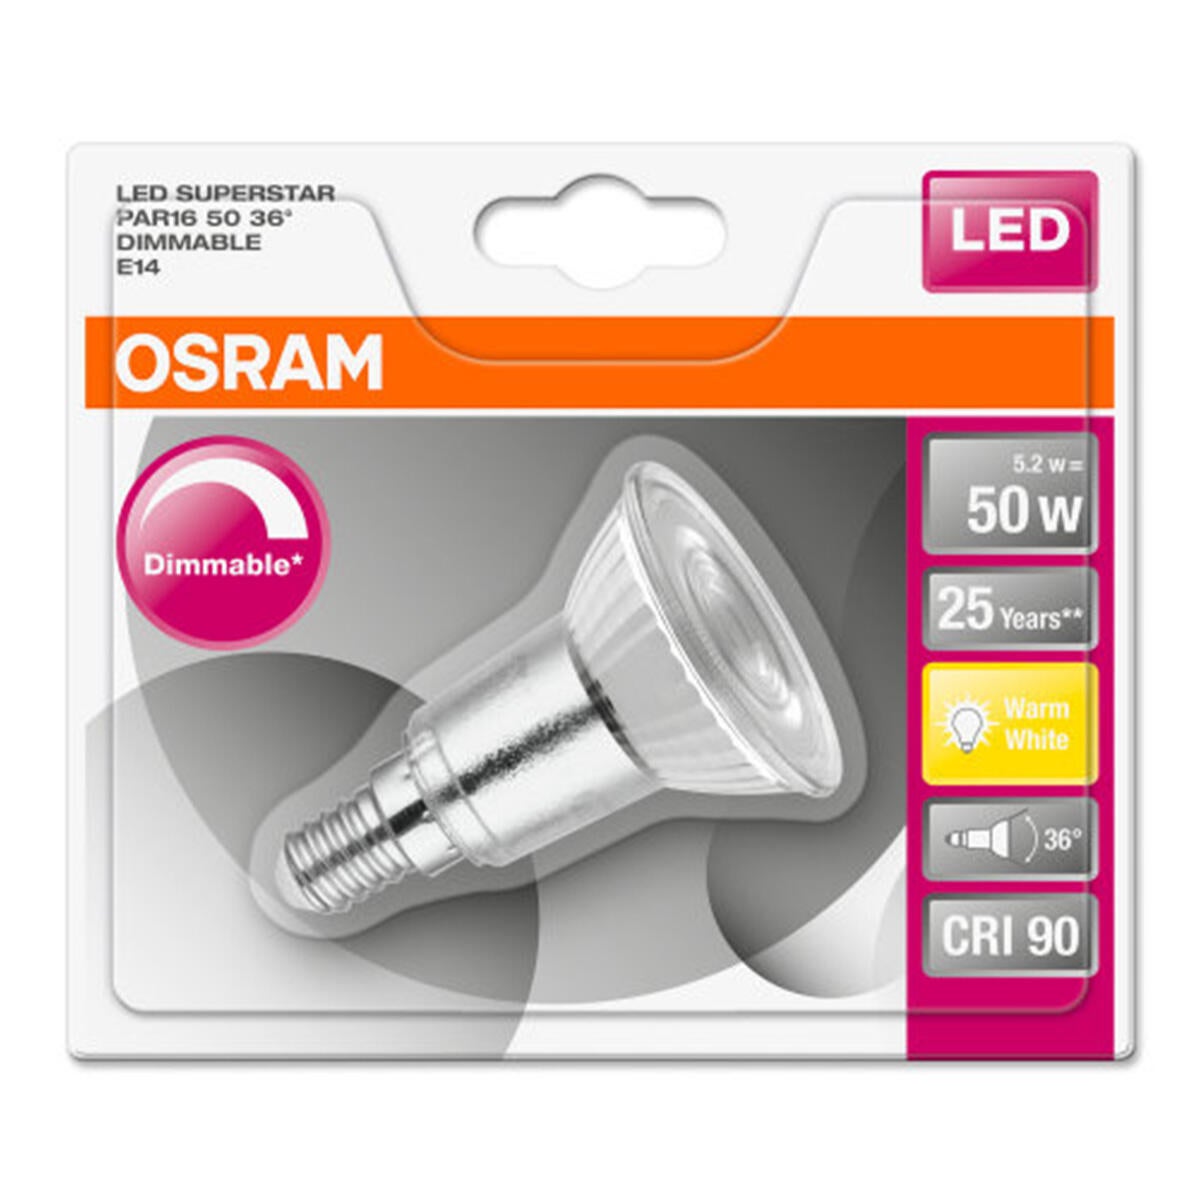 Lampadina LED, E14, Faretto, Trasparente, Luce calda, 5.2W=350LM (equiv 50 W), 36° dimmerabile, OSRAM - 2